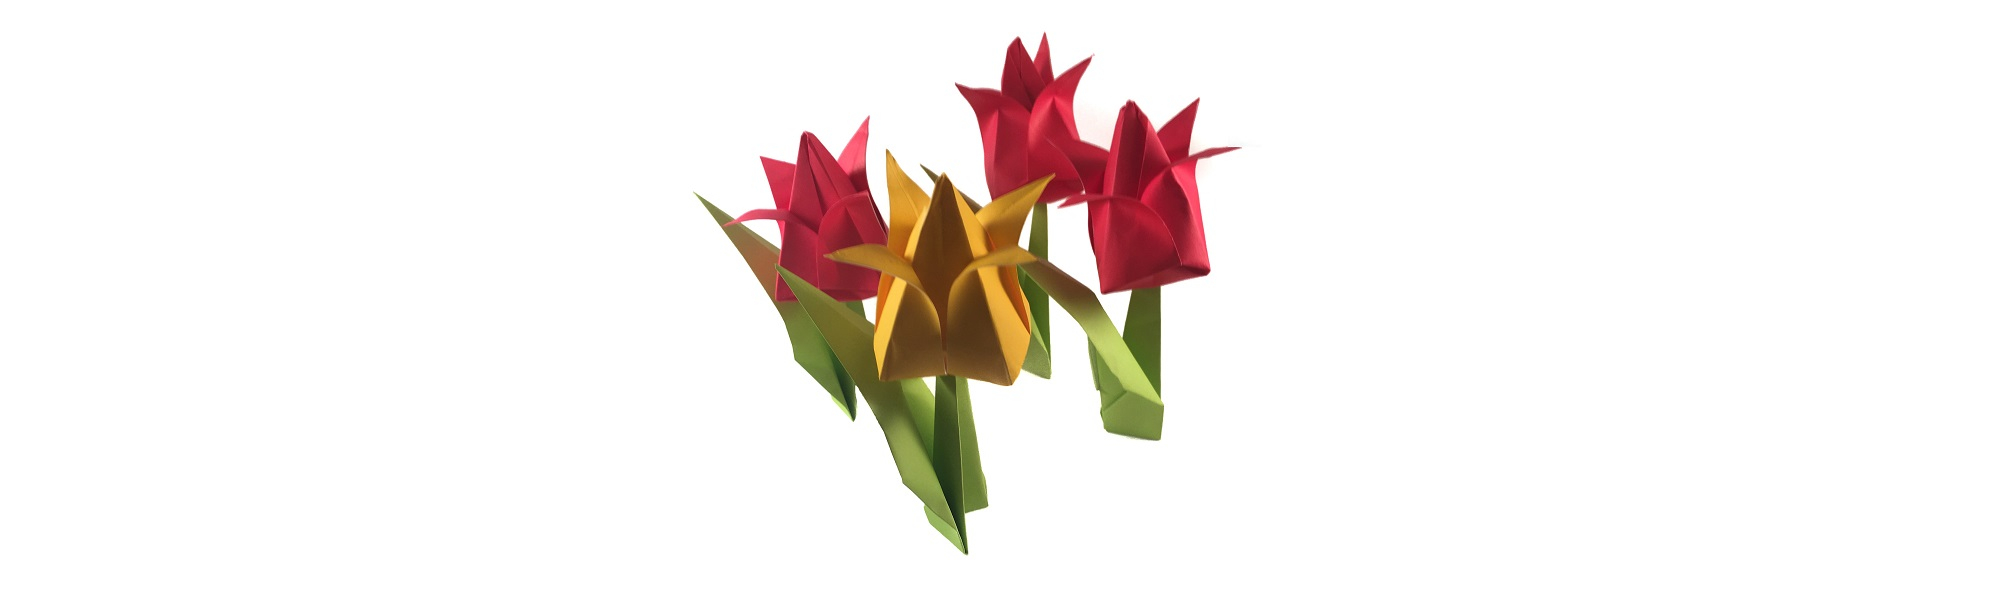 Origami Flower Stem Origami Tulip Flower With Stem Flowers Healthy